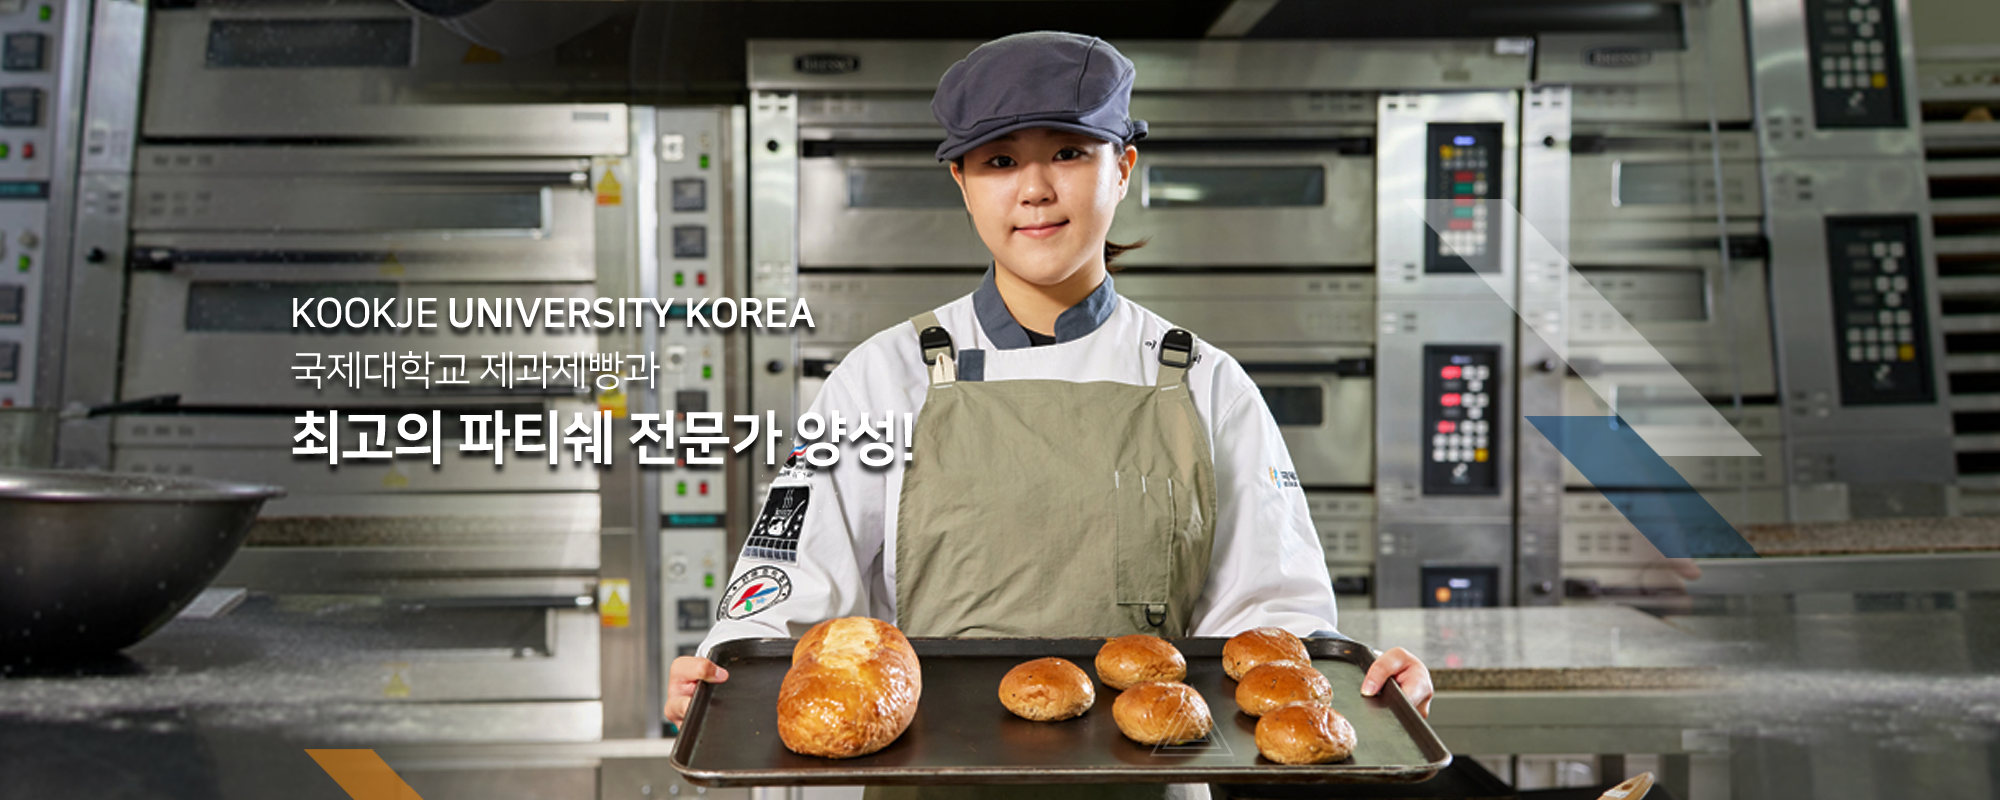 KOOKJE UNIVERSITY KOREA 국제대학교 제과제빵과 최고의 파티쉐 전문가 양성!